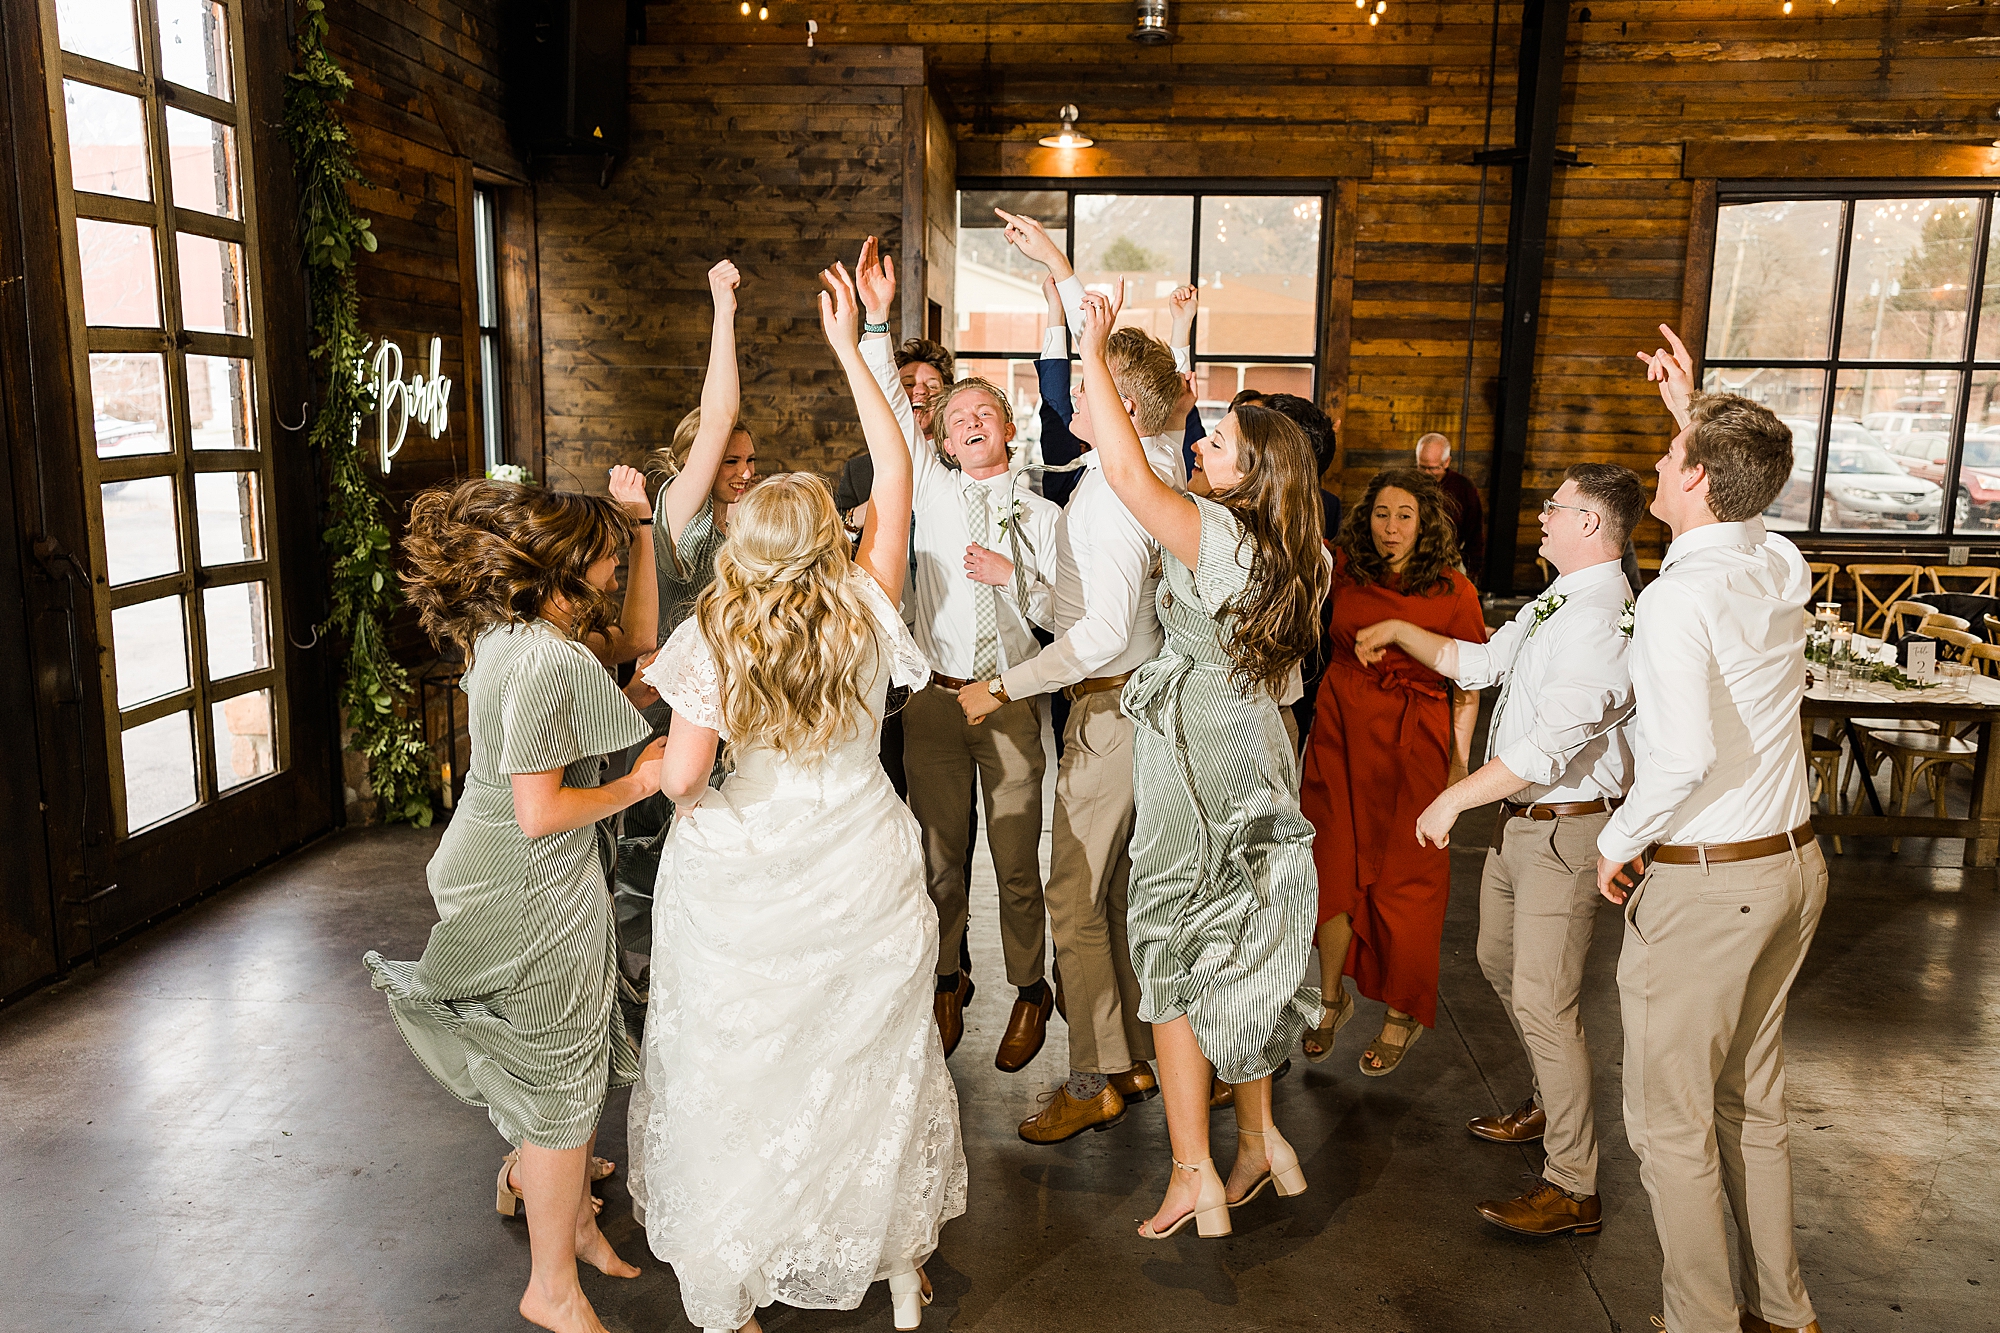 Wedding guests having fun and dancing on the dance floor
